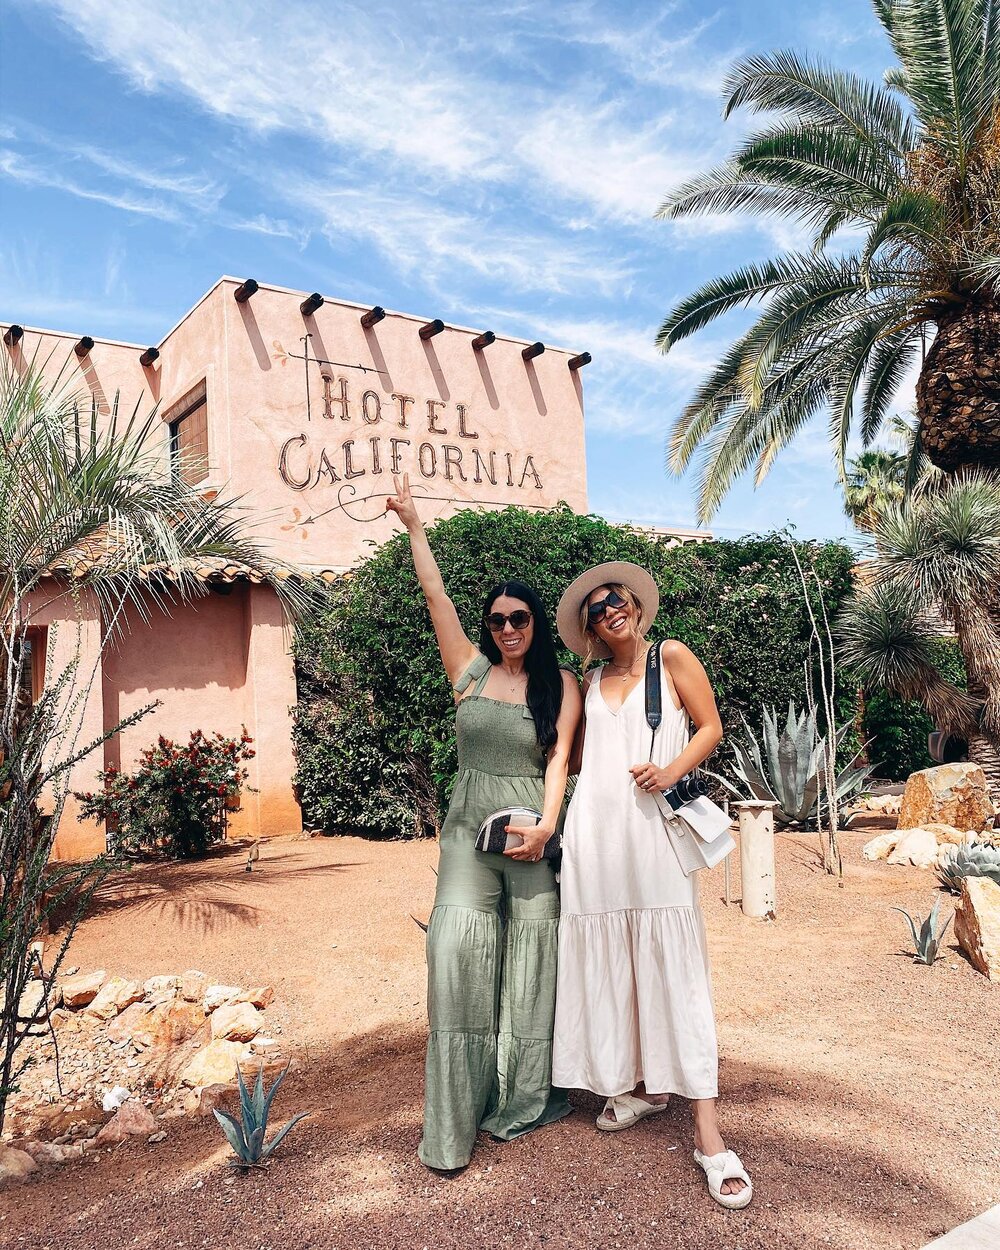 🌴✌️ Welcome to the Hotel California! Ready for another trip with this gem @vero_world90 #wheretonext 

//

#whensheroams #travelcalifornia #girlslovetravel #lasvegasbloggers #lasvegasblogger #vegasblogger #palmsprings  #dametraveler #styleblogger #f